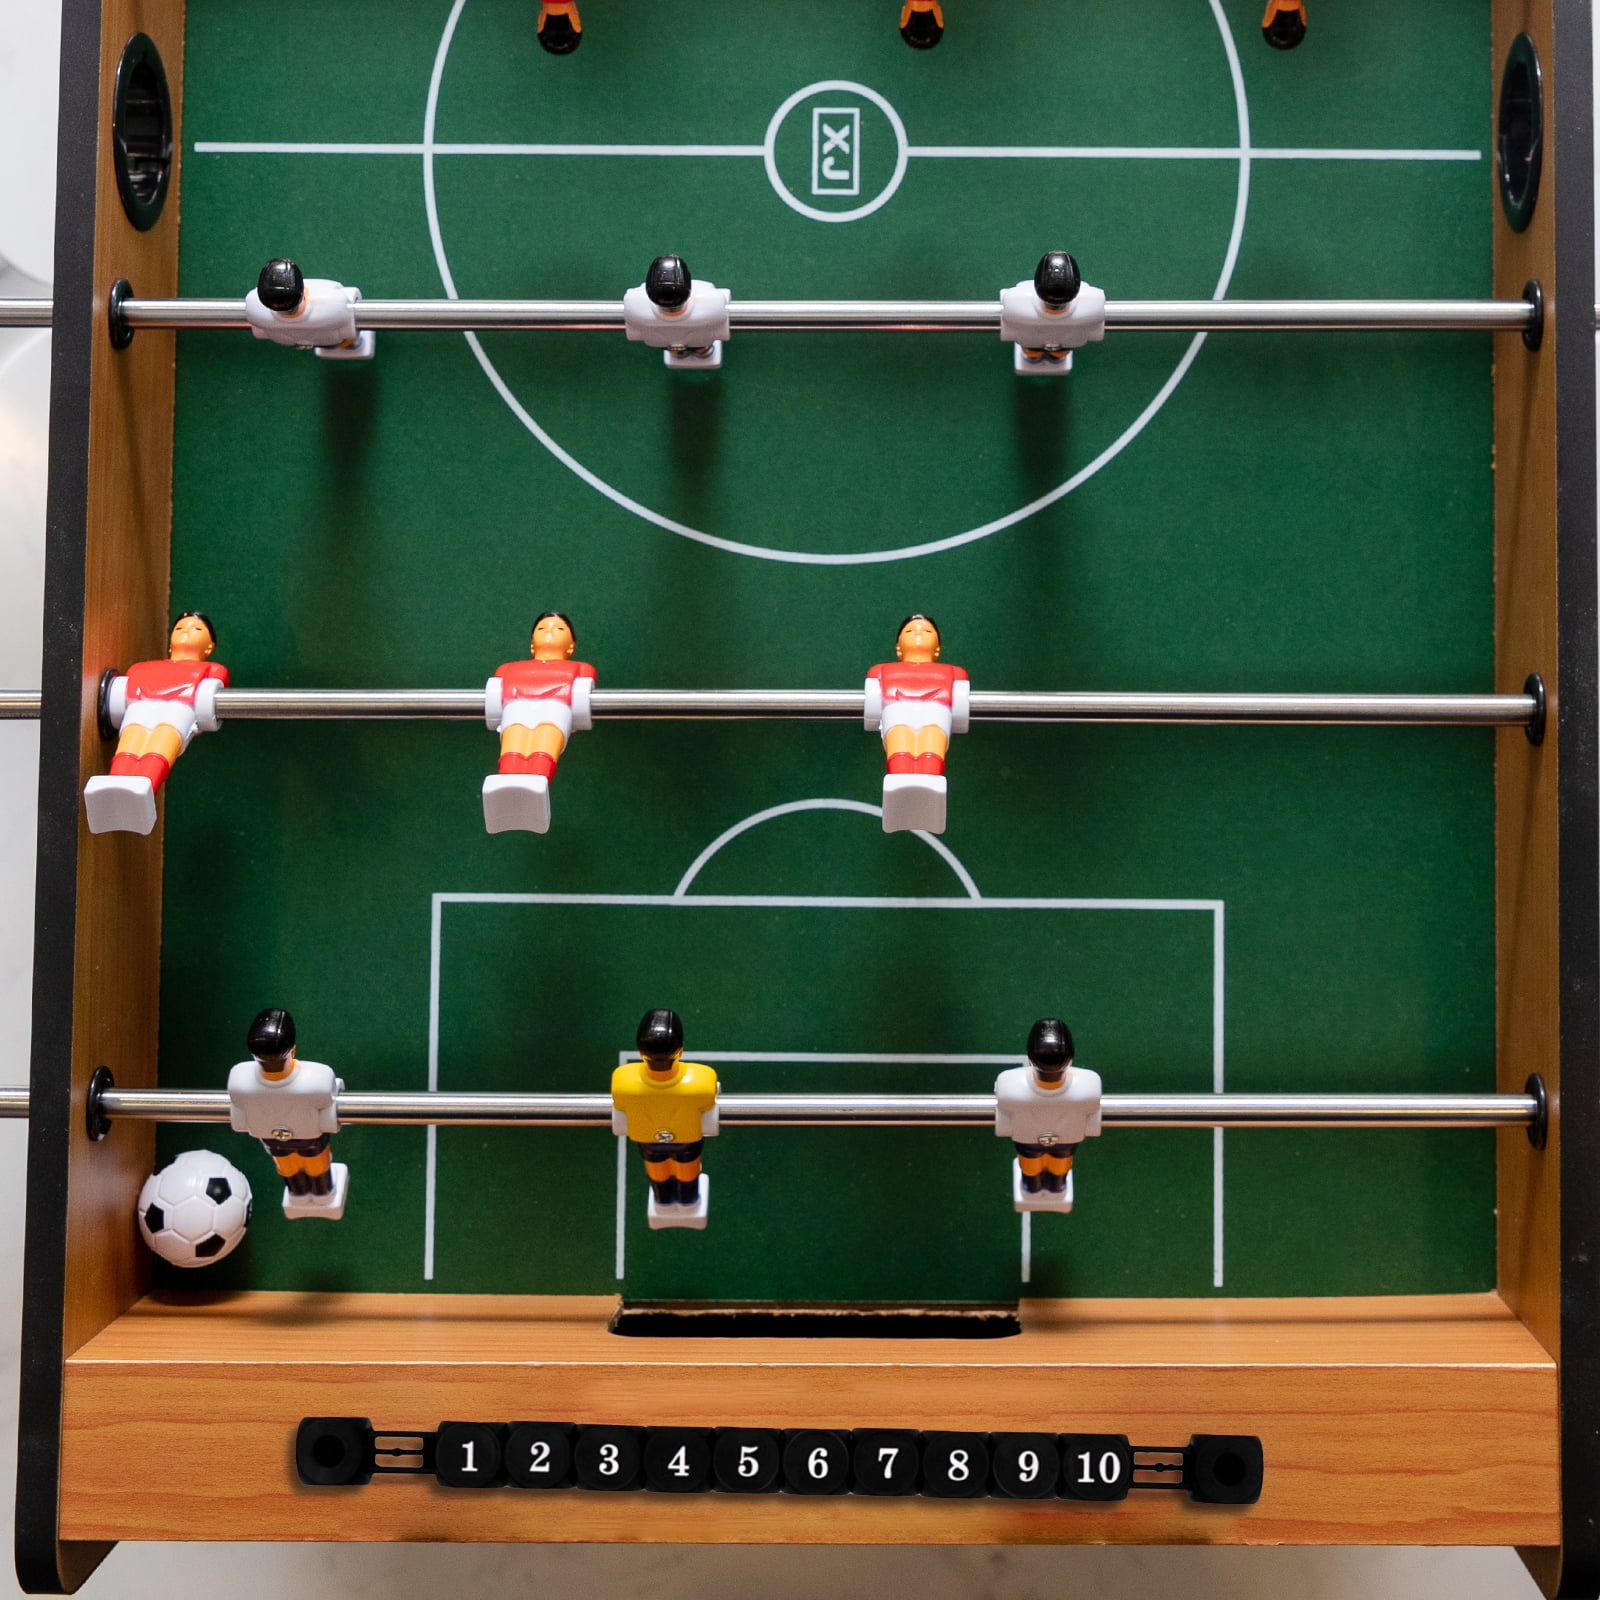 Foosball Machine Table Football Scoring Units Air Hockey Score Counter 